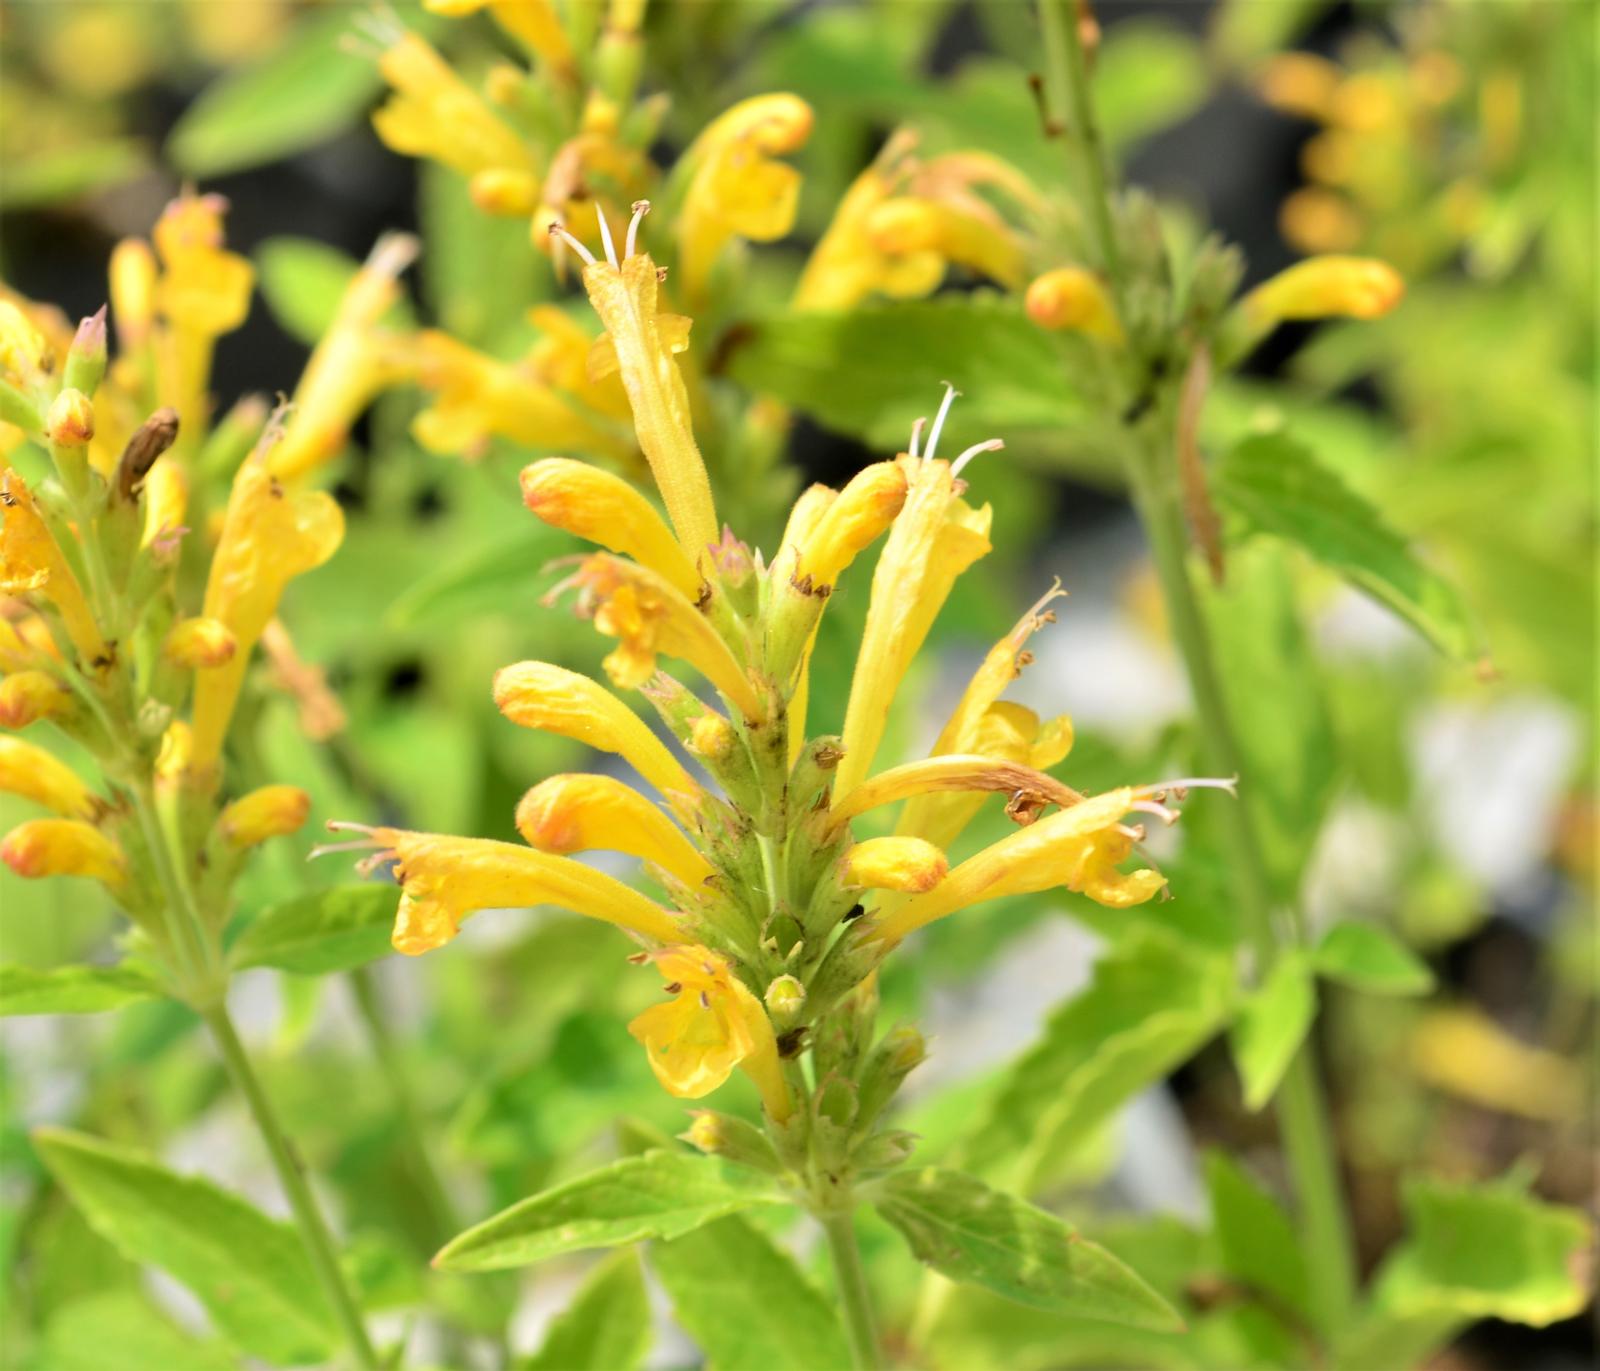 Agastache hybrida Poquito 'Butter Yellow' - Hummingbird Mint from Hillcrest Nursery